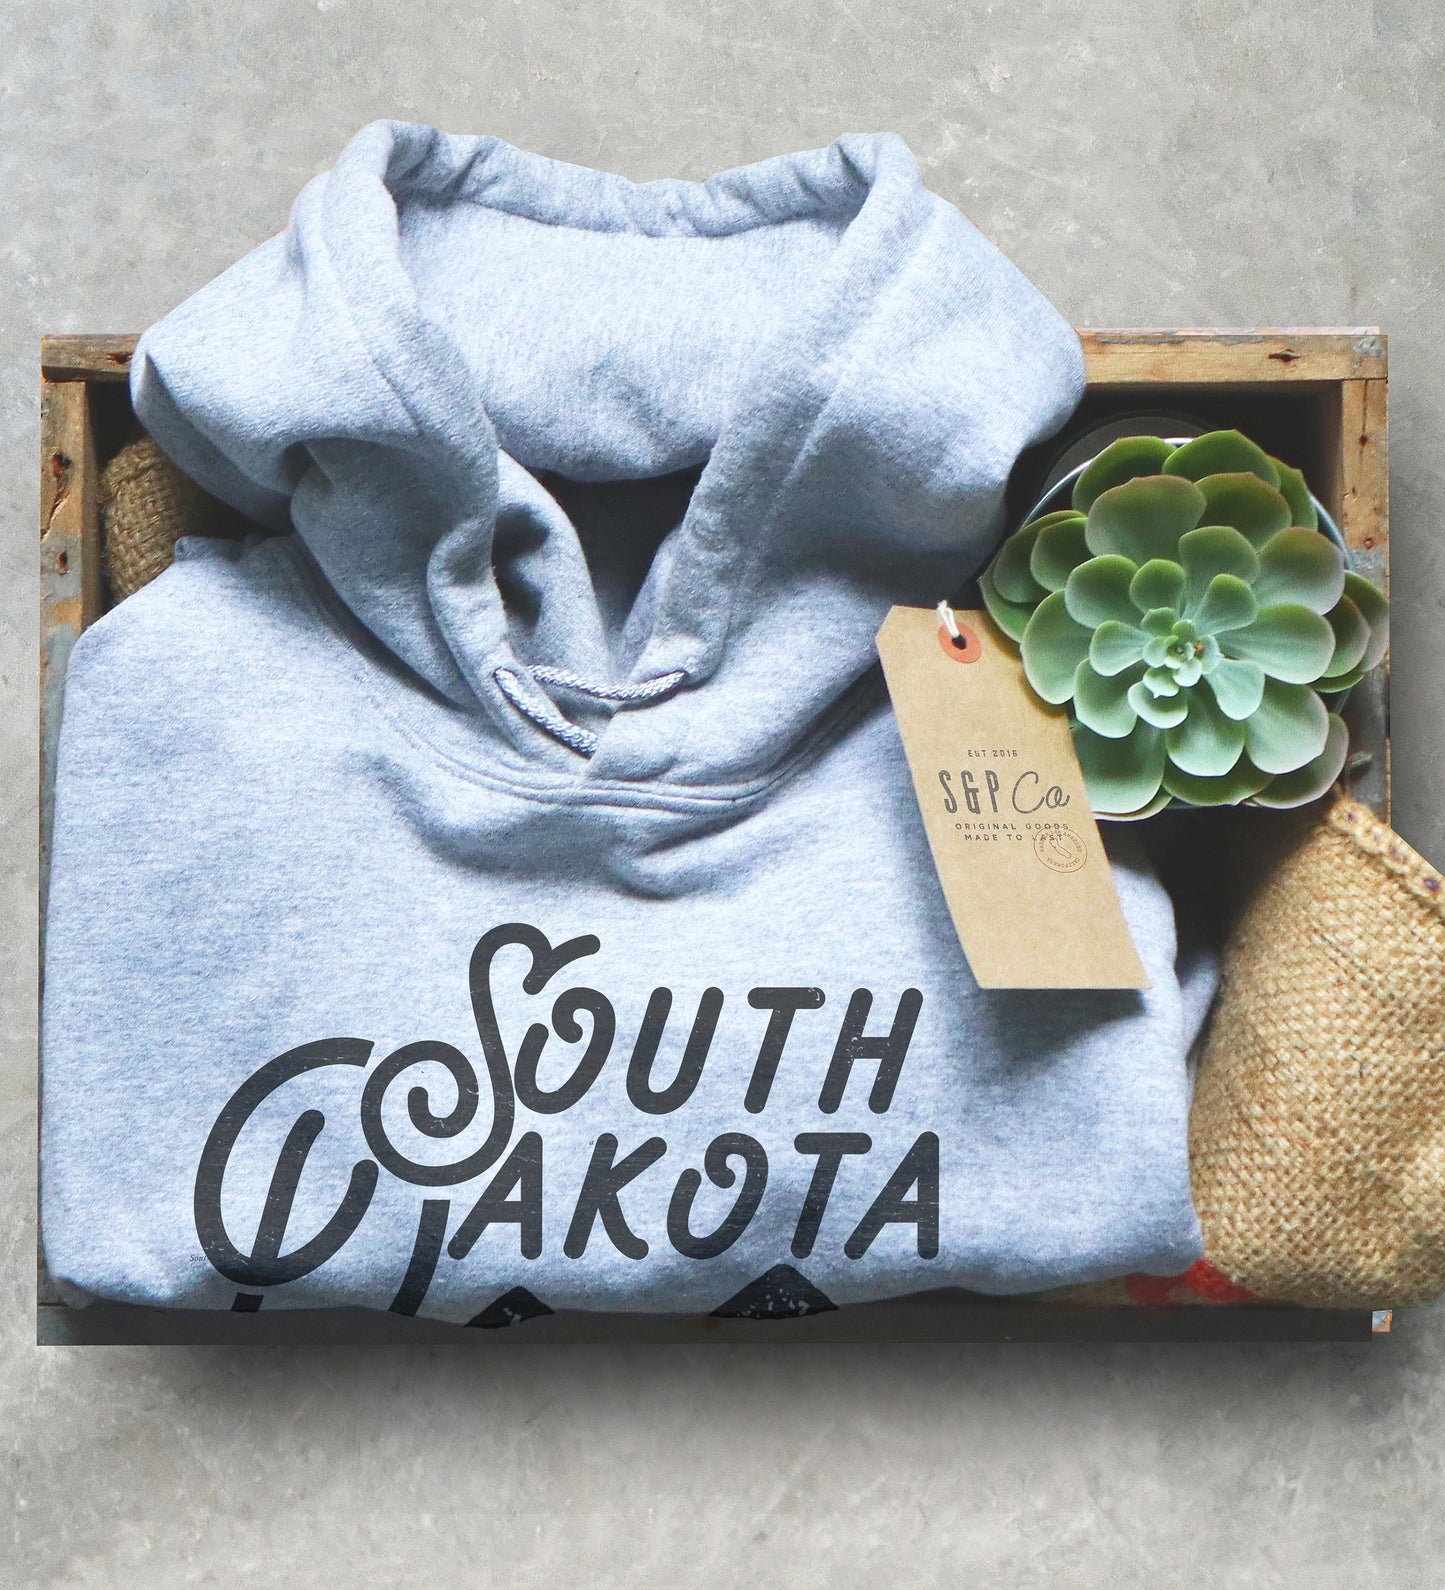 South Dakota Is Calling Unisex Hoodie - South Dakota Shirt, State Shirt, South Dakota Home Gift, South Dakota Sweatshirt, Sioux Falls Shirt